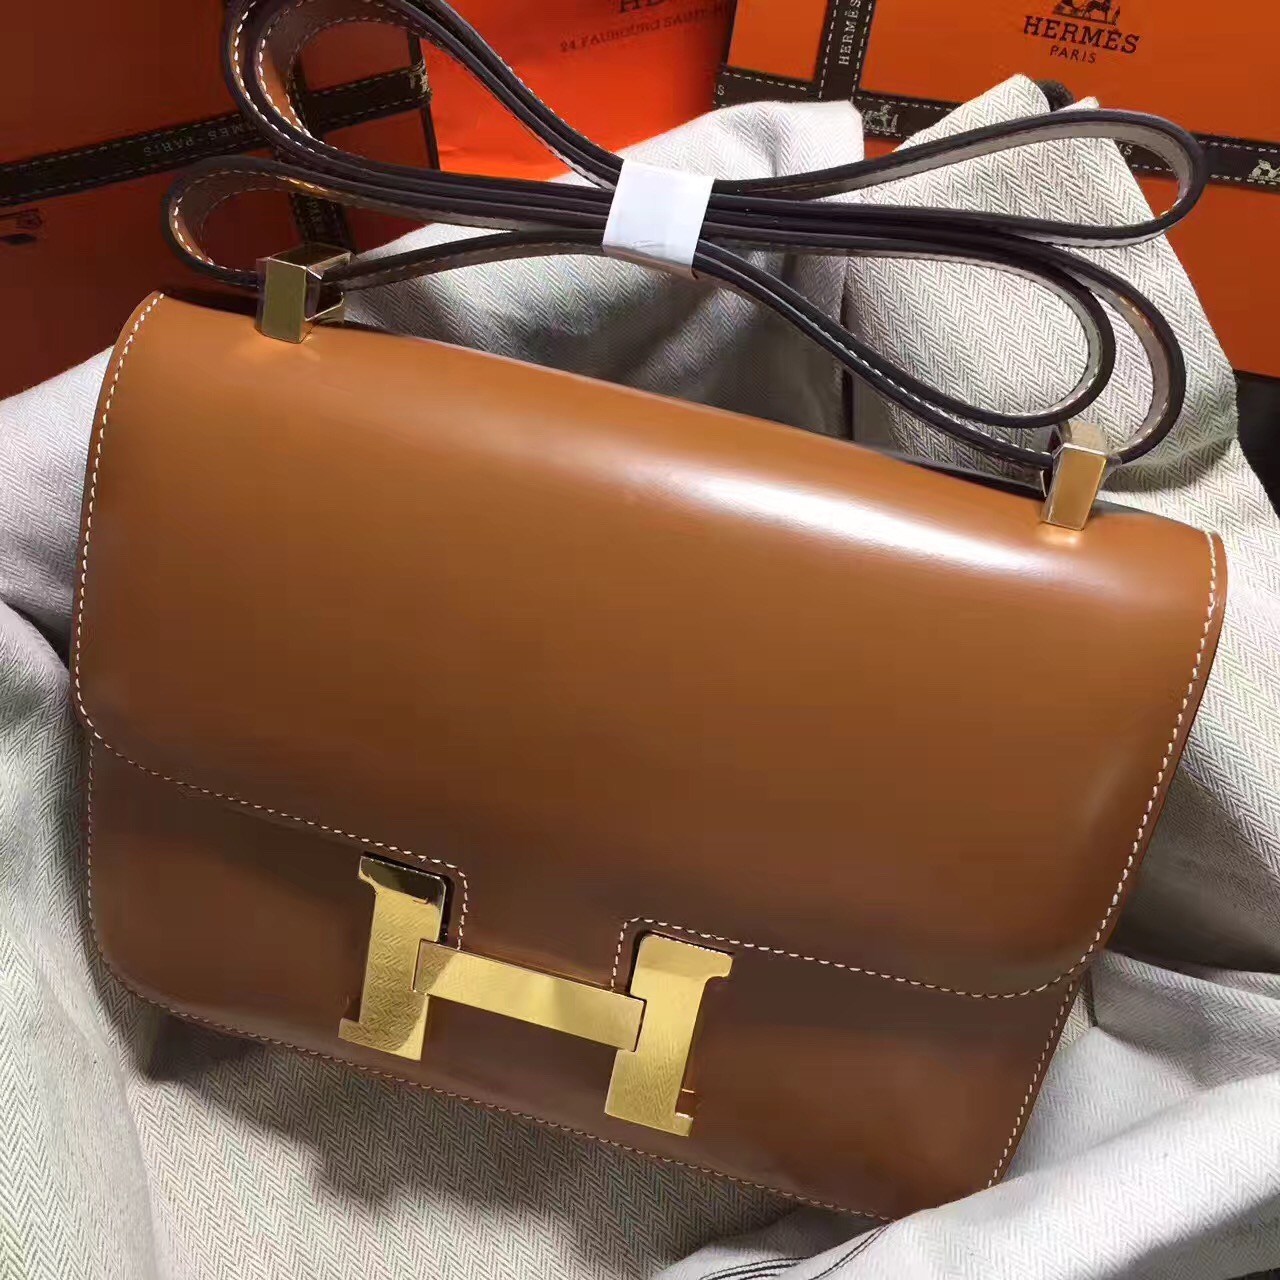 Hermes original box leather small constance bag C019 coffee